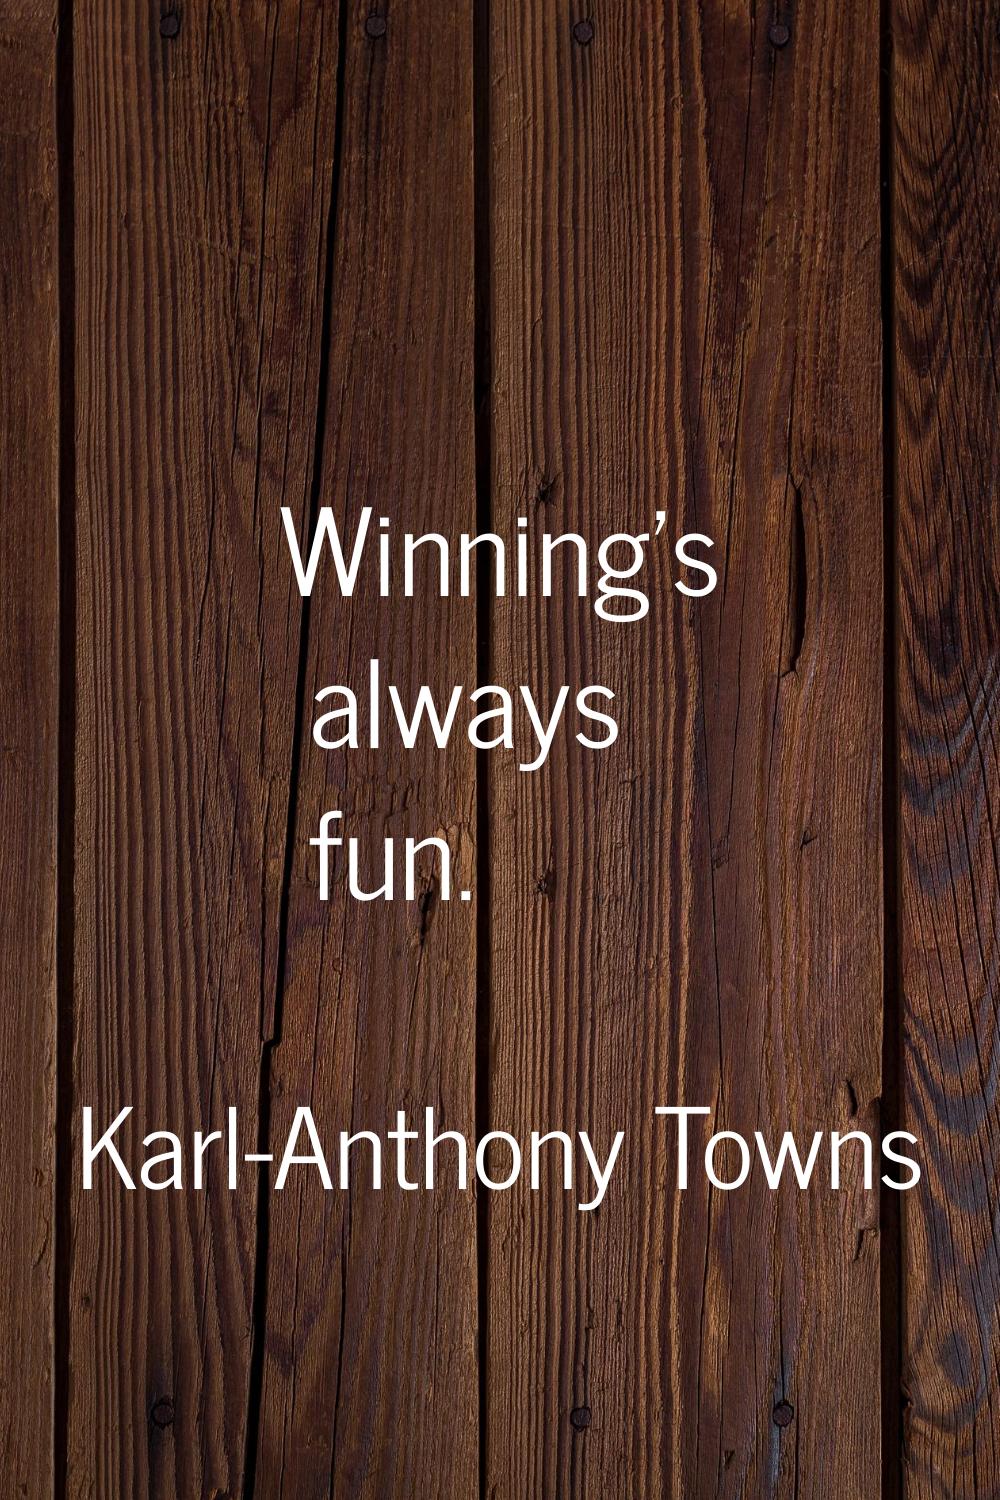 Winning's always fun.